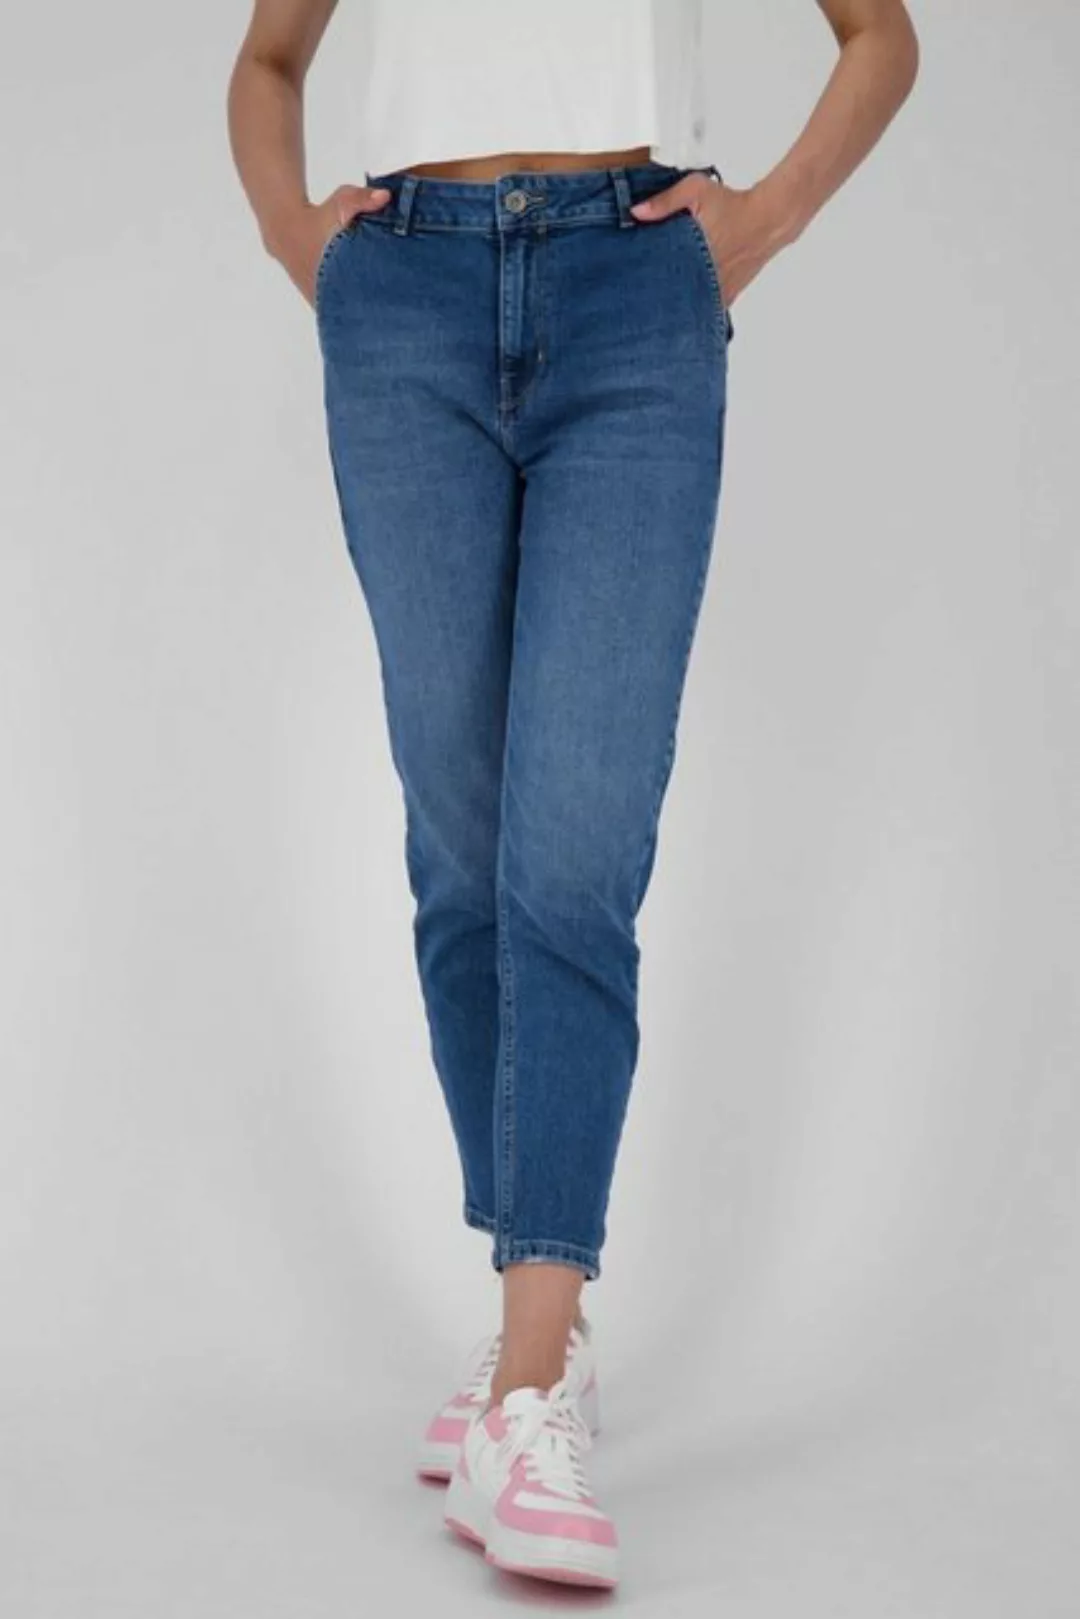 Alife & Kickin Mom-Jeans "LaureenAK DNM A Pants Damen Jeanshose" günstig online kaufen